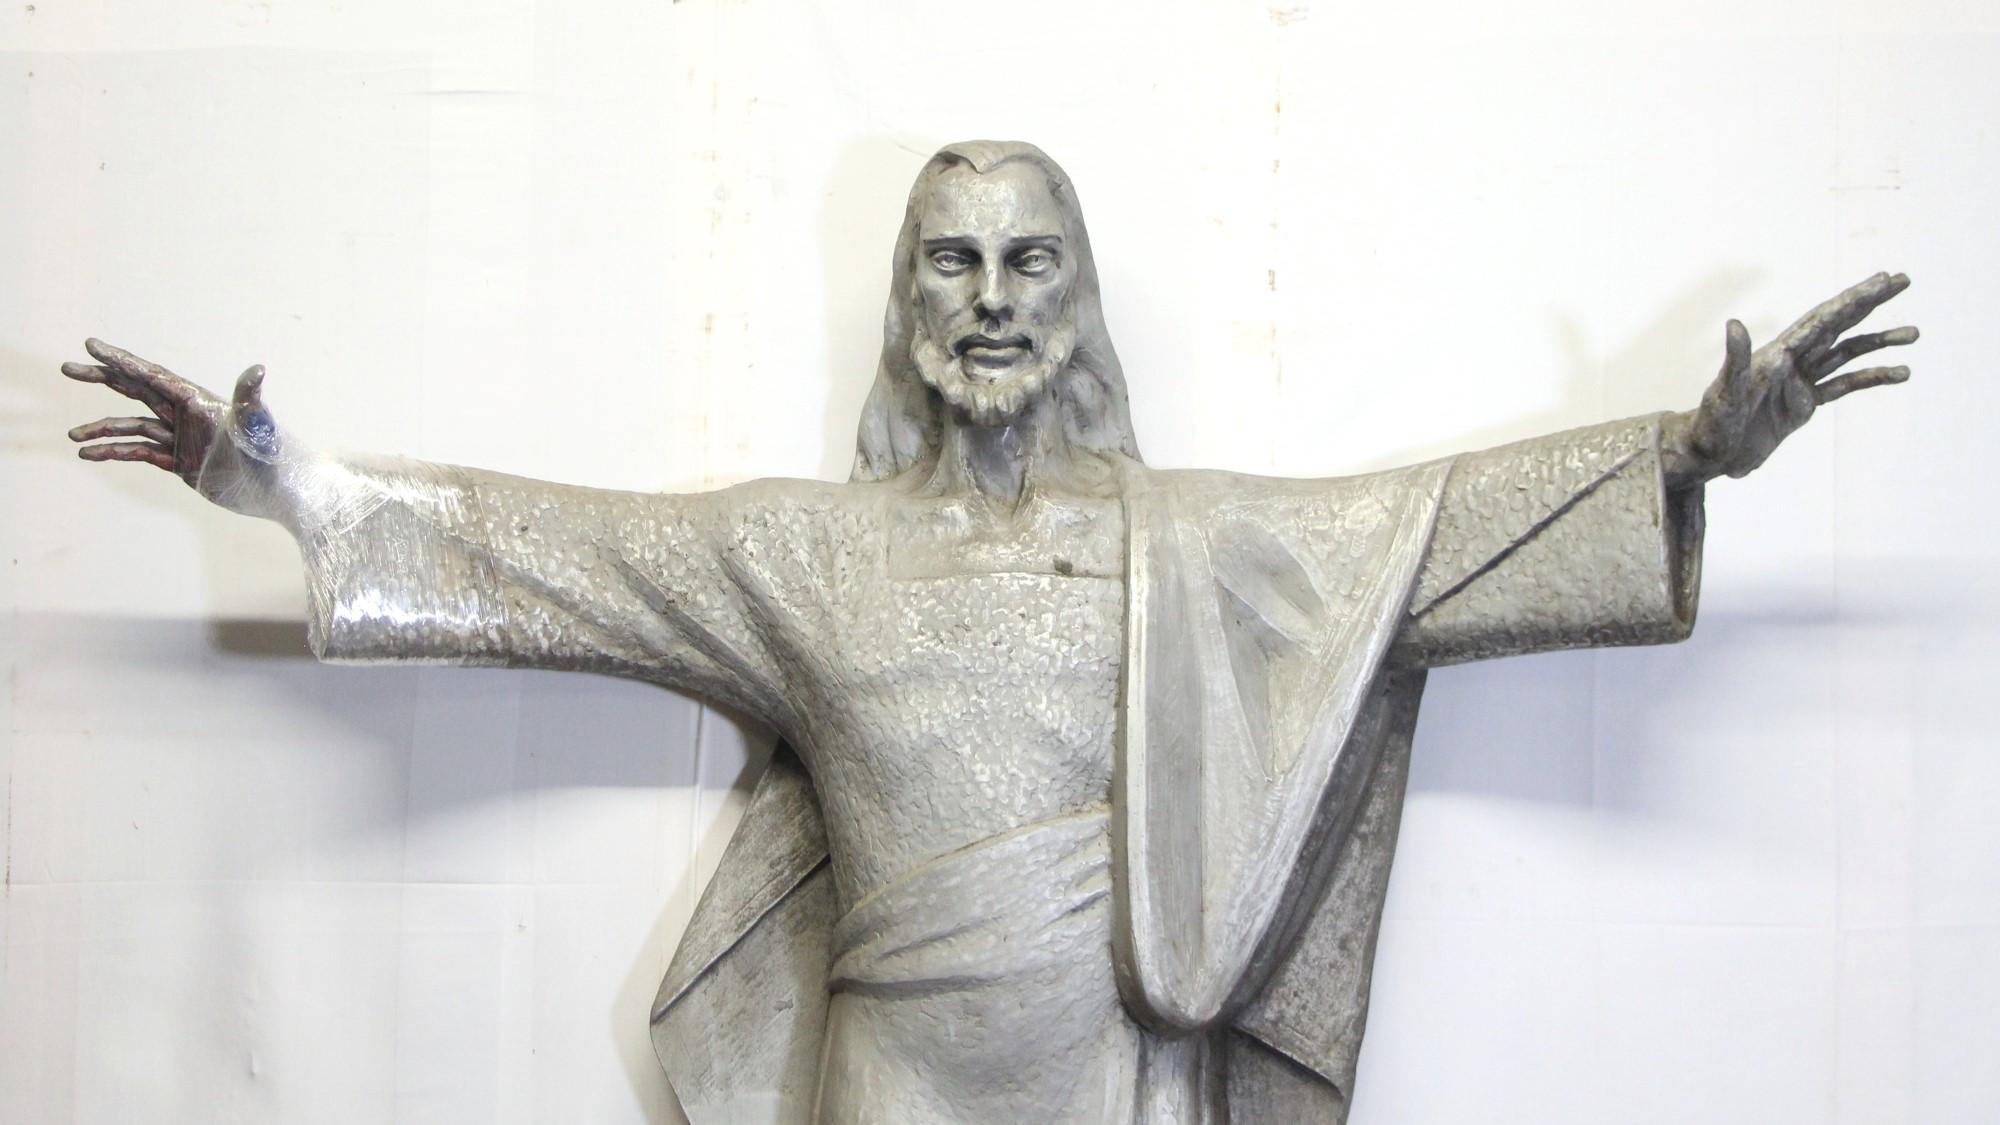 swole jesus statue